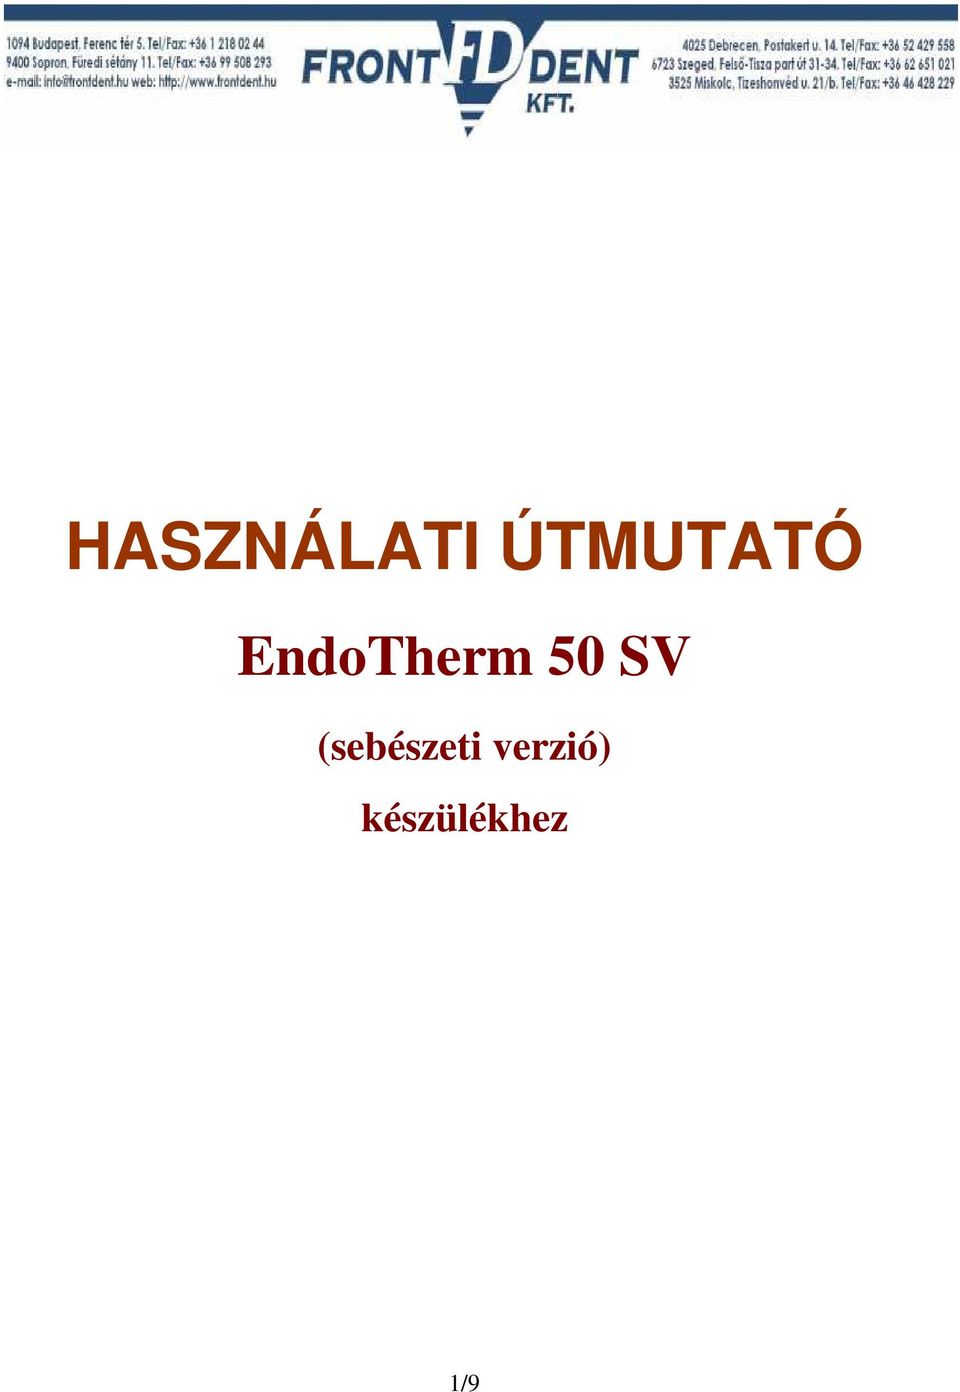 EndoTherm 50 SV